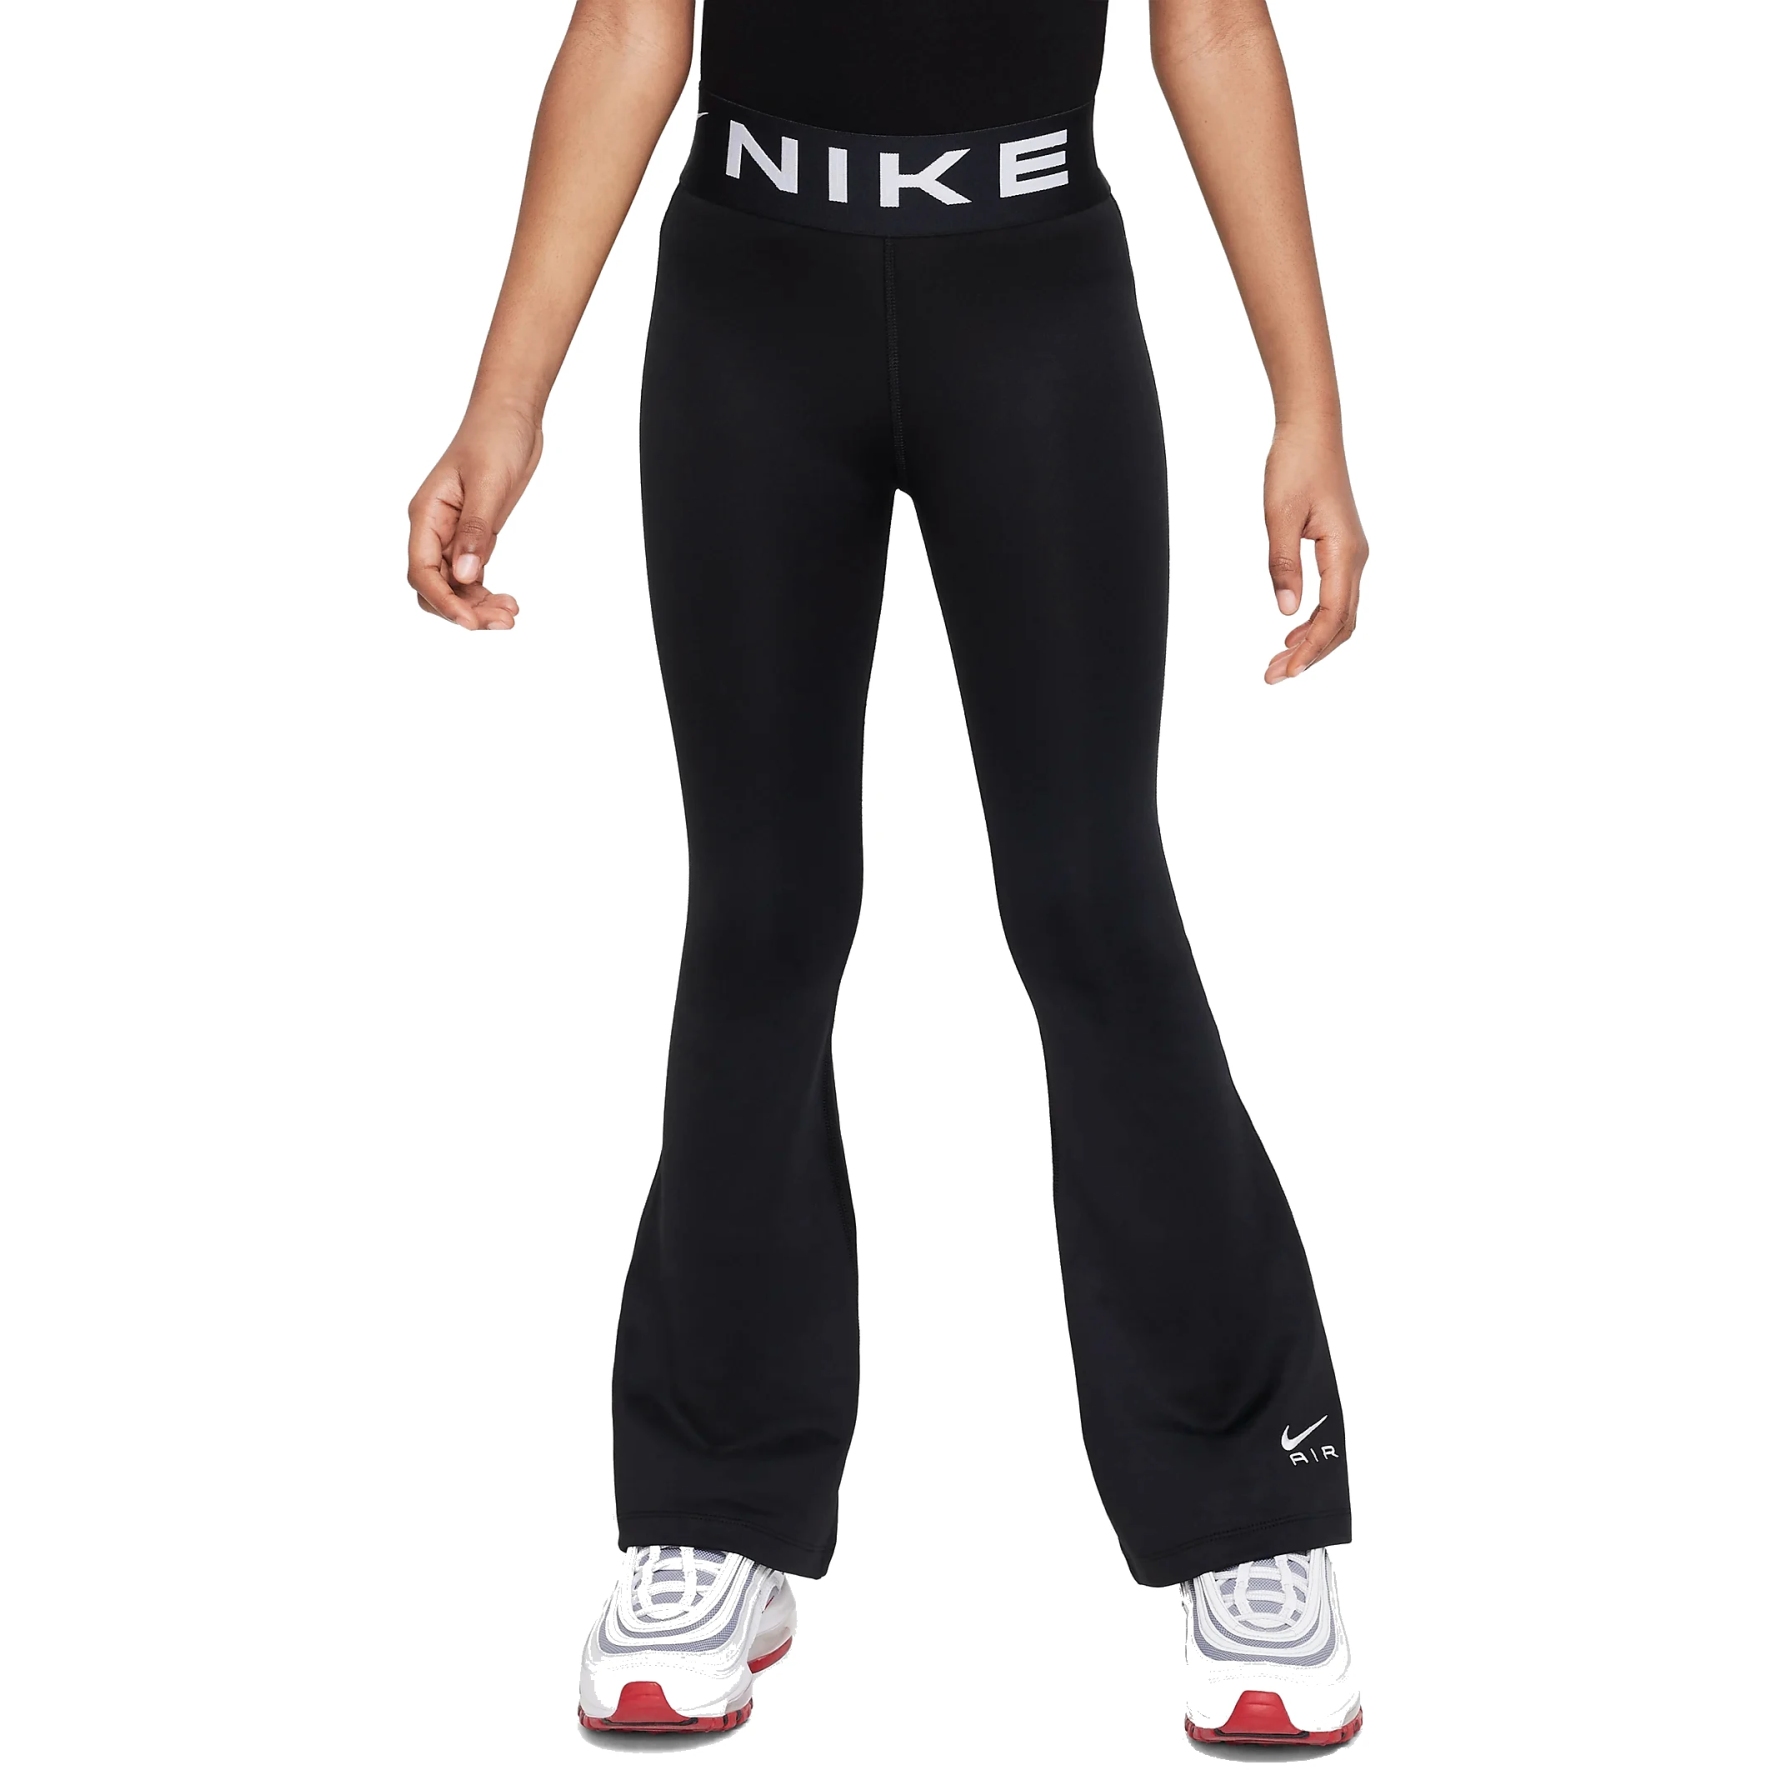 Immagine di Nike Legging Bambini - Air Essential - nero/bianco FD2963-010